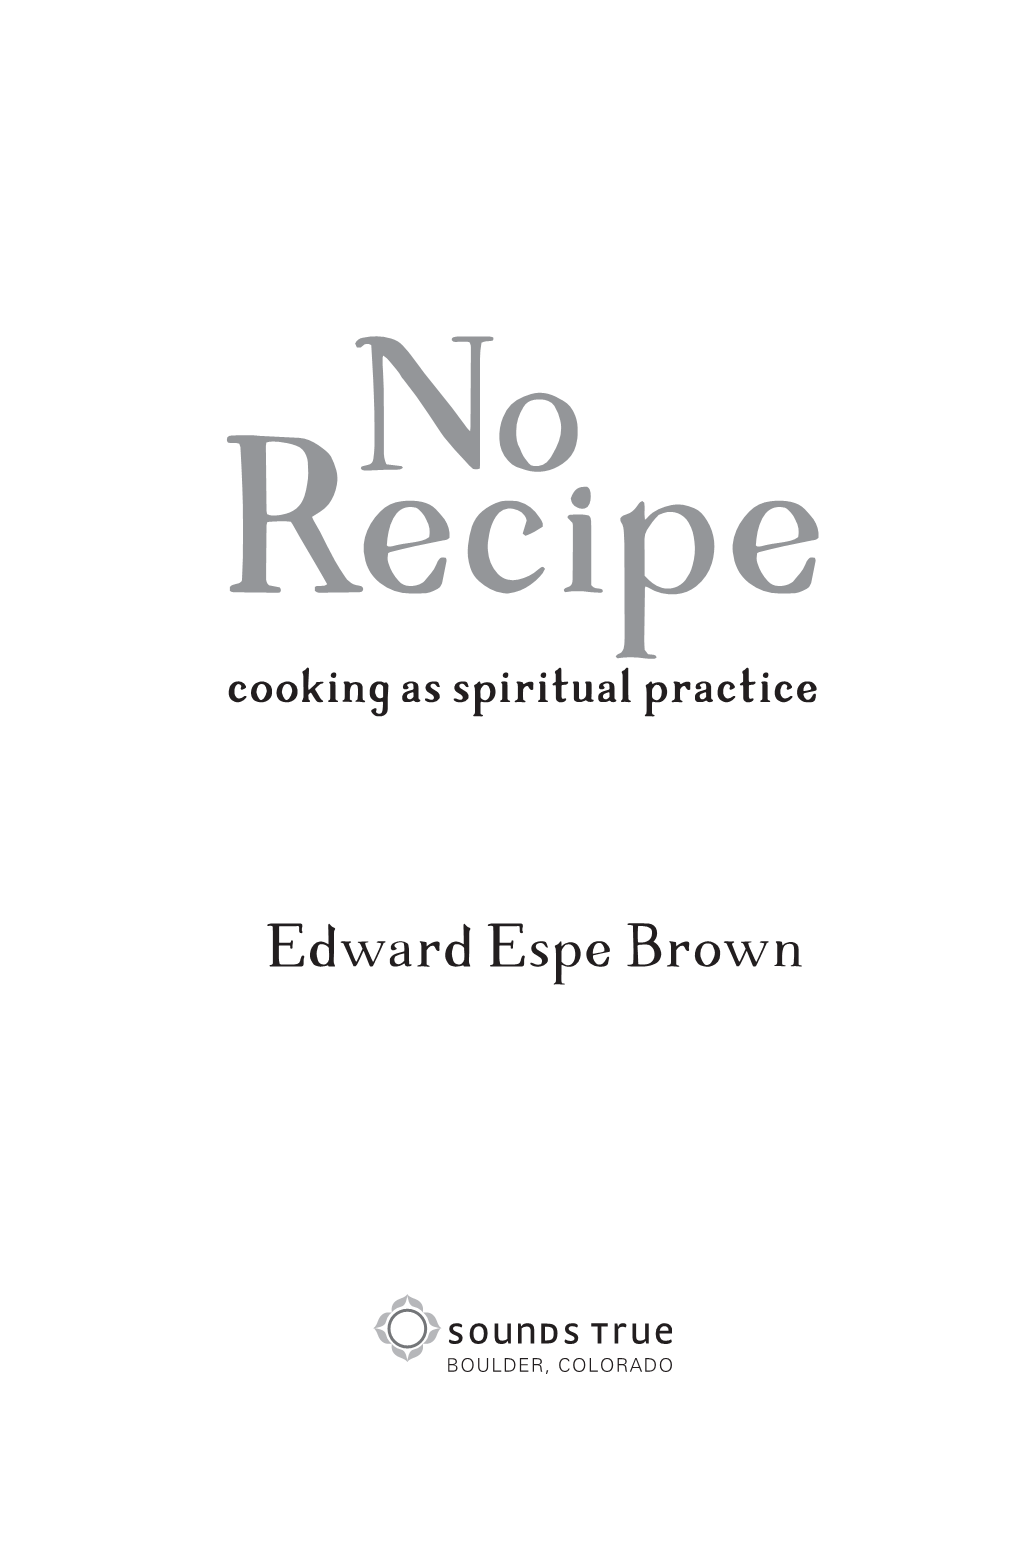 Edward Espe Brown